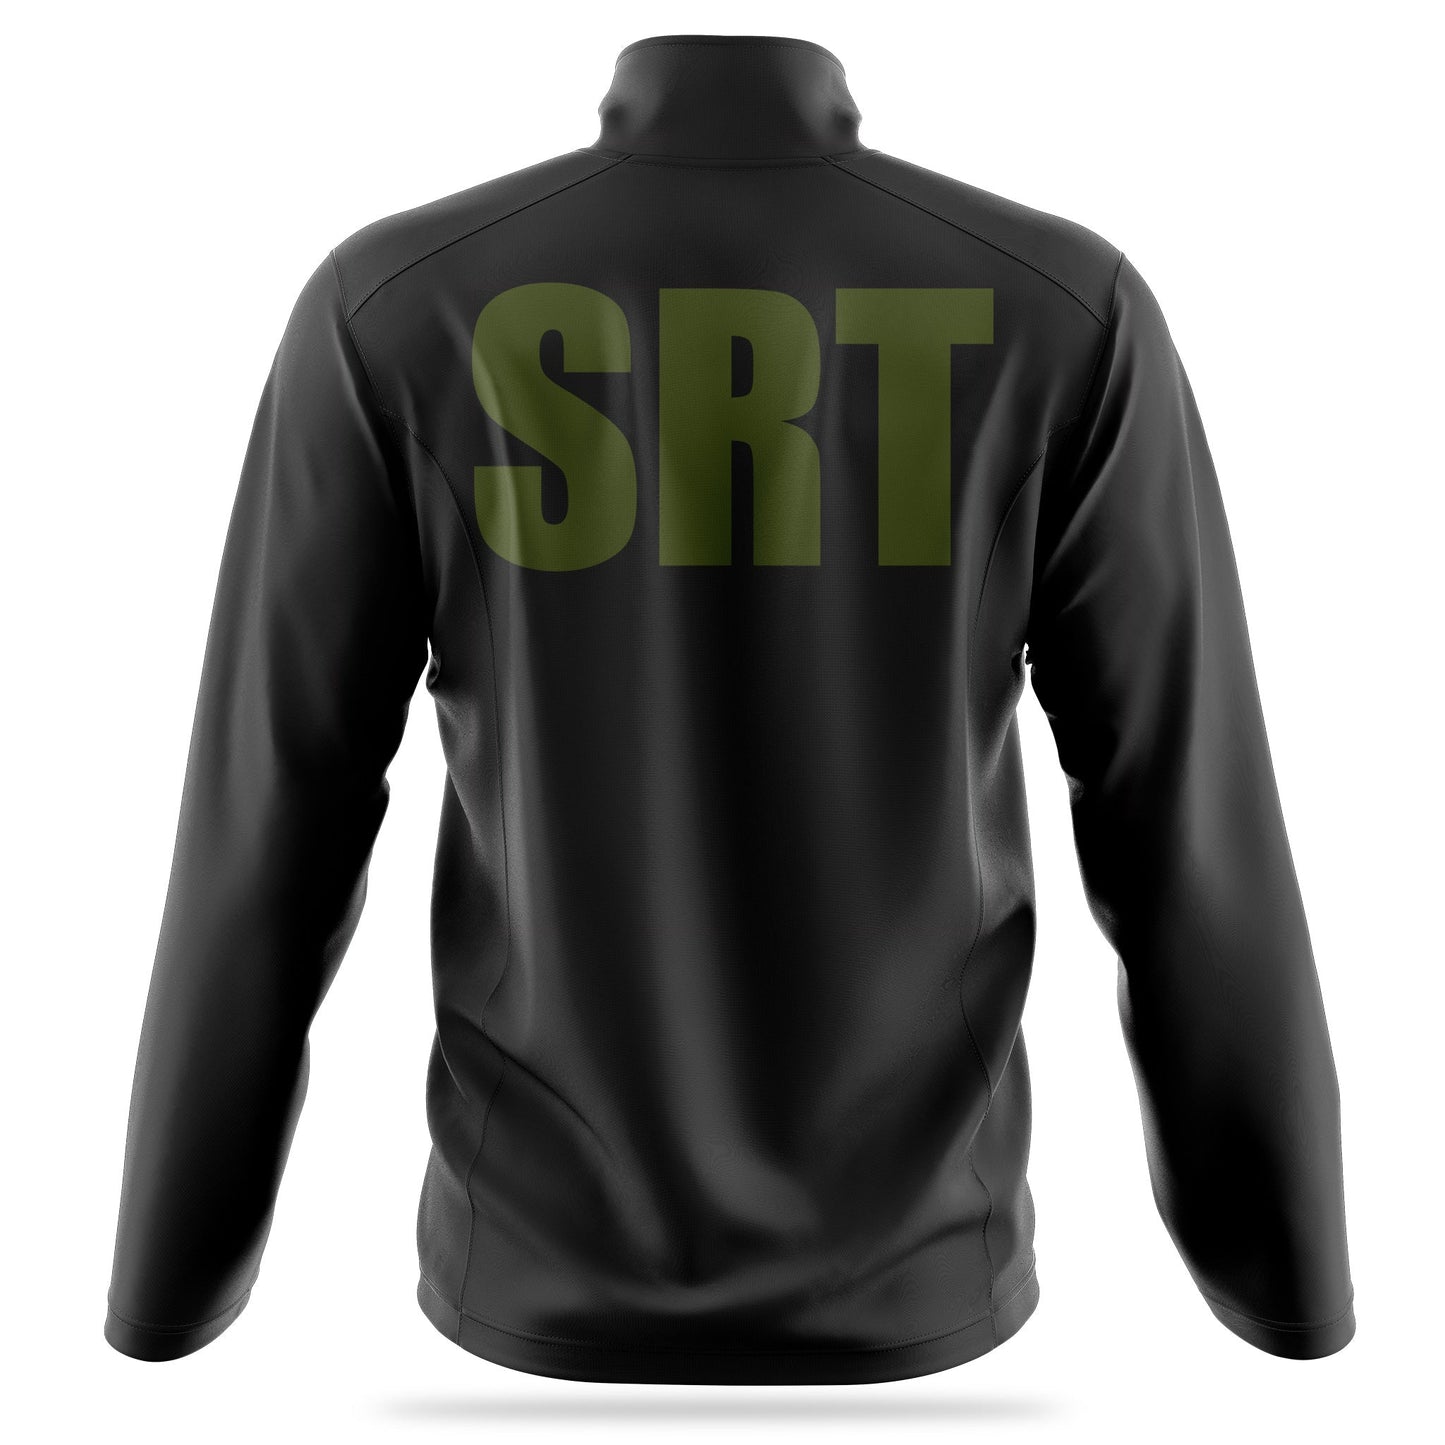 [SRT] Soft Shell Jacket [BLK/GRN]-13 Fifty Apparel